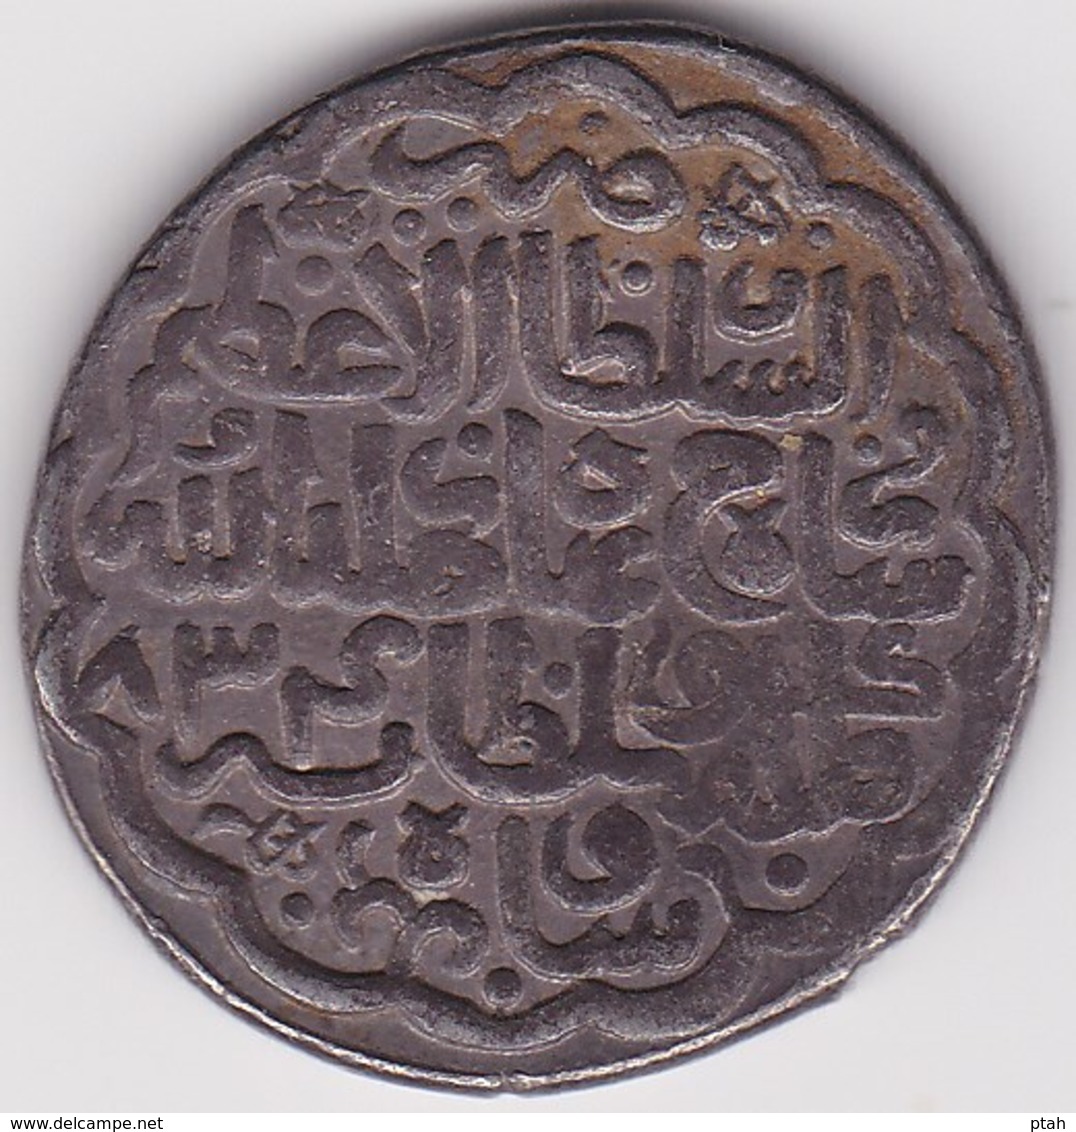 PERSIA, Timurid, Shahrukh, Tanka - Islamic